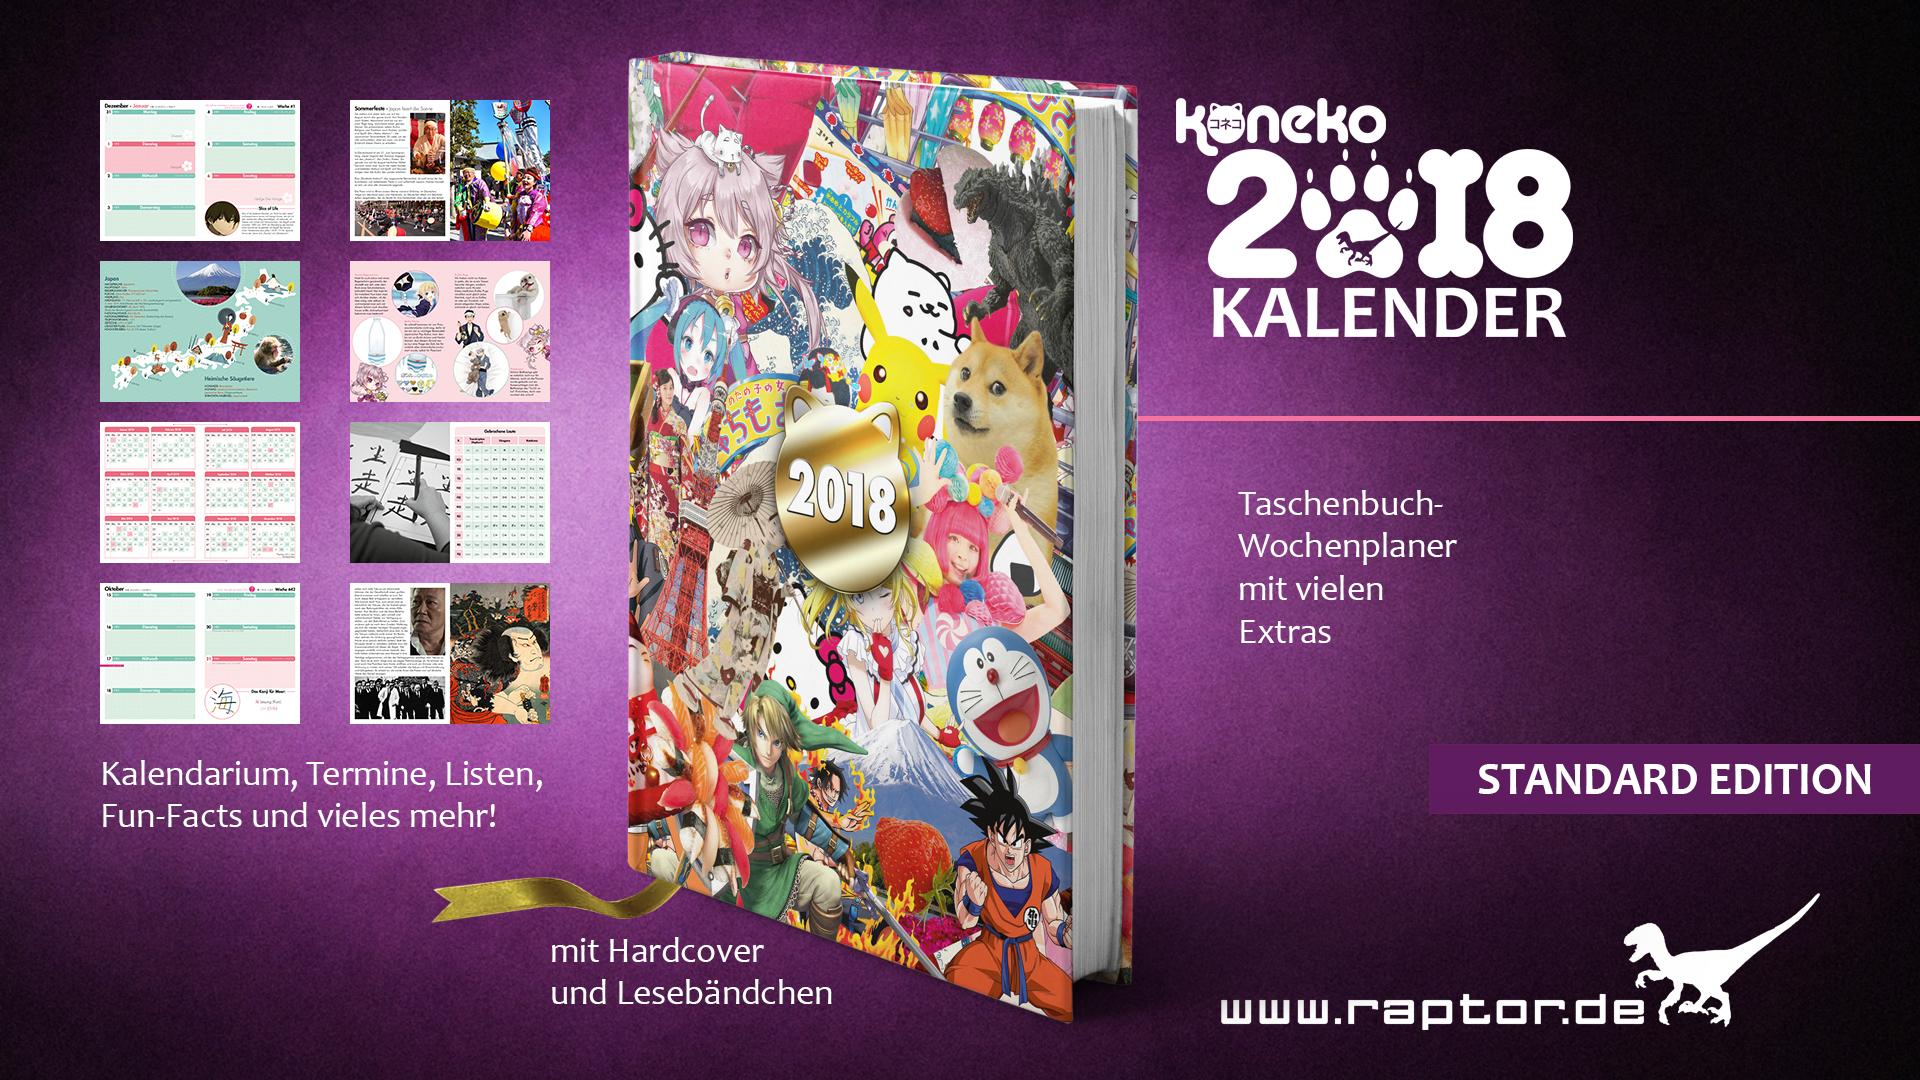 Koneko Kalender 2018 Standard Edition